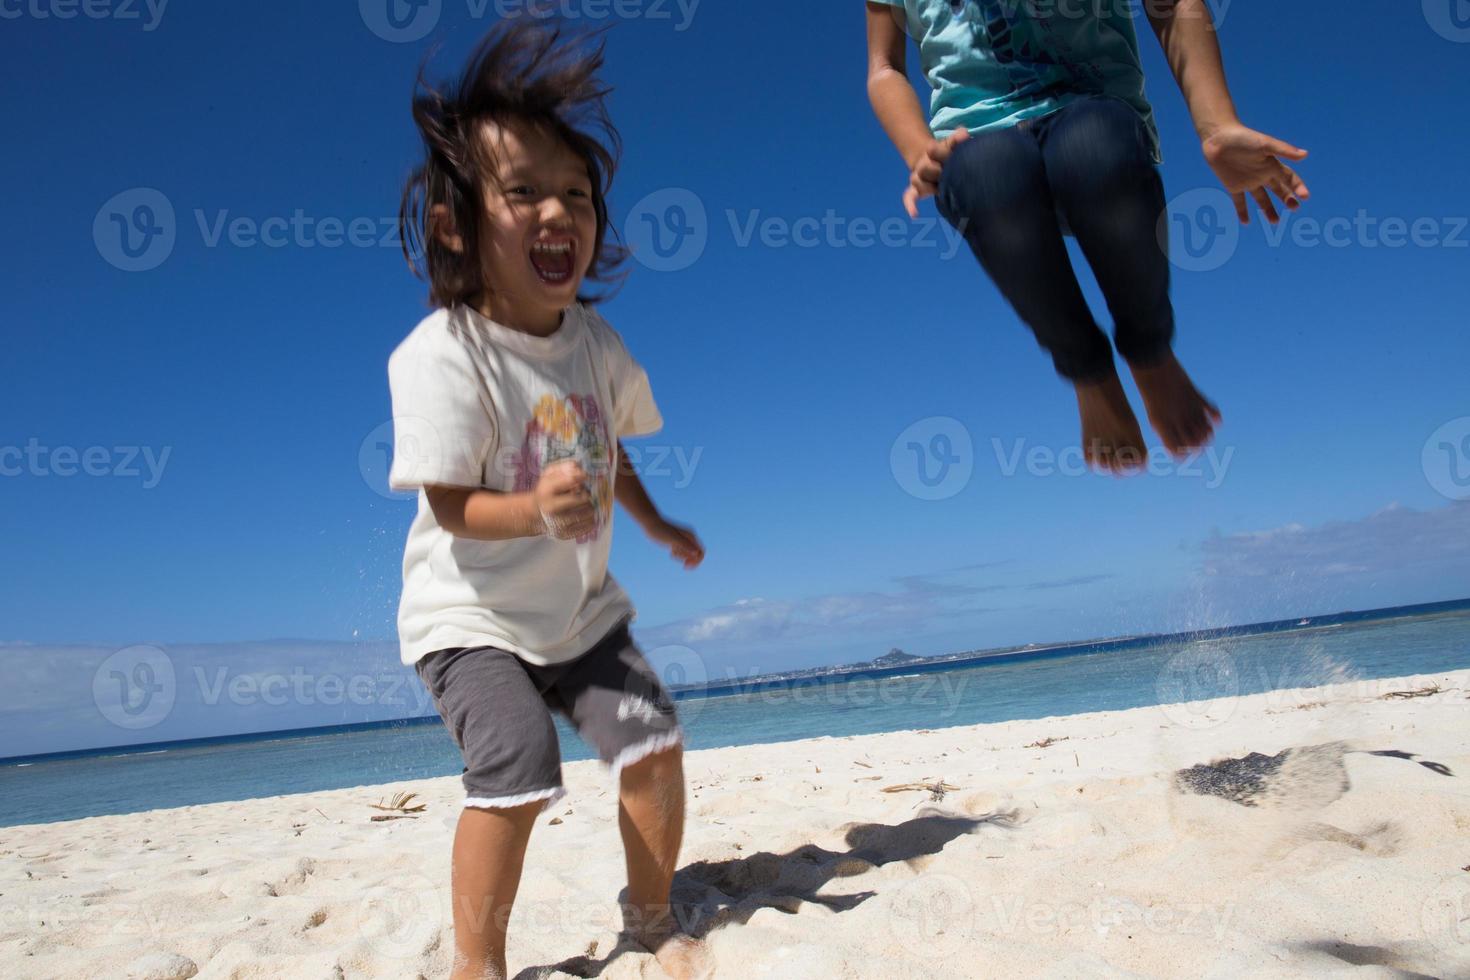 barn som hoppar på stranden foto